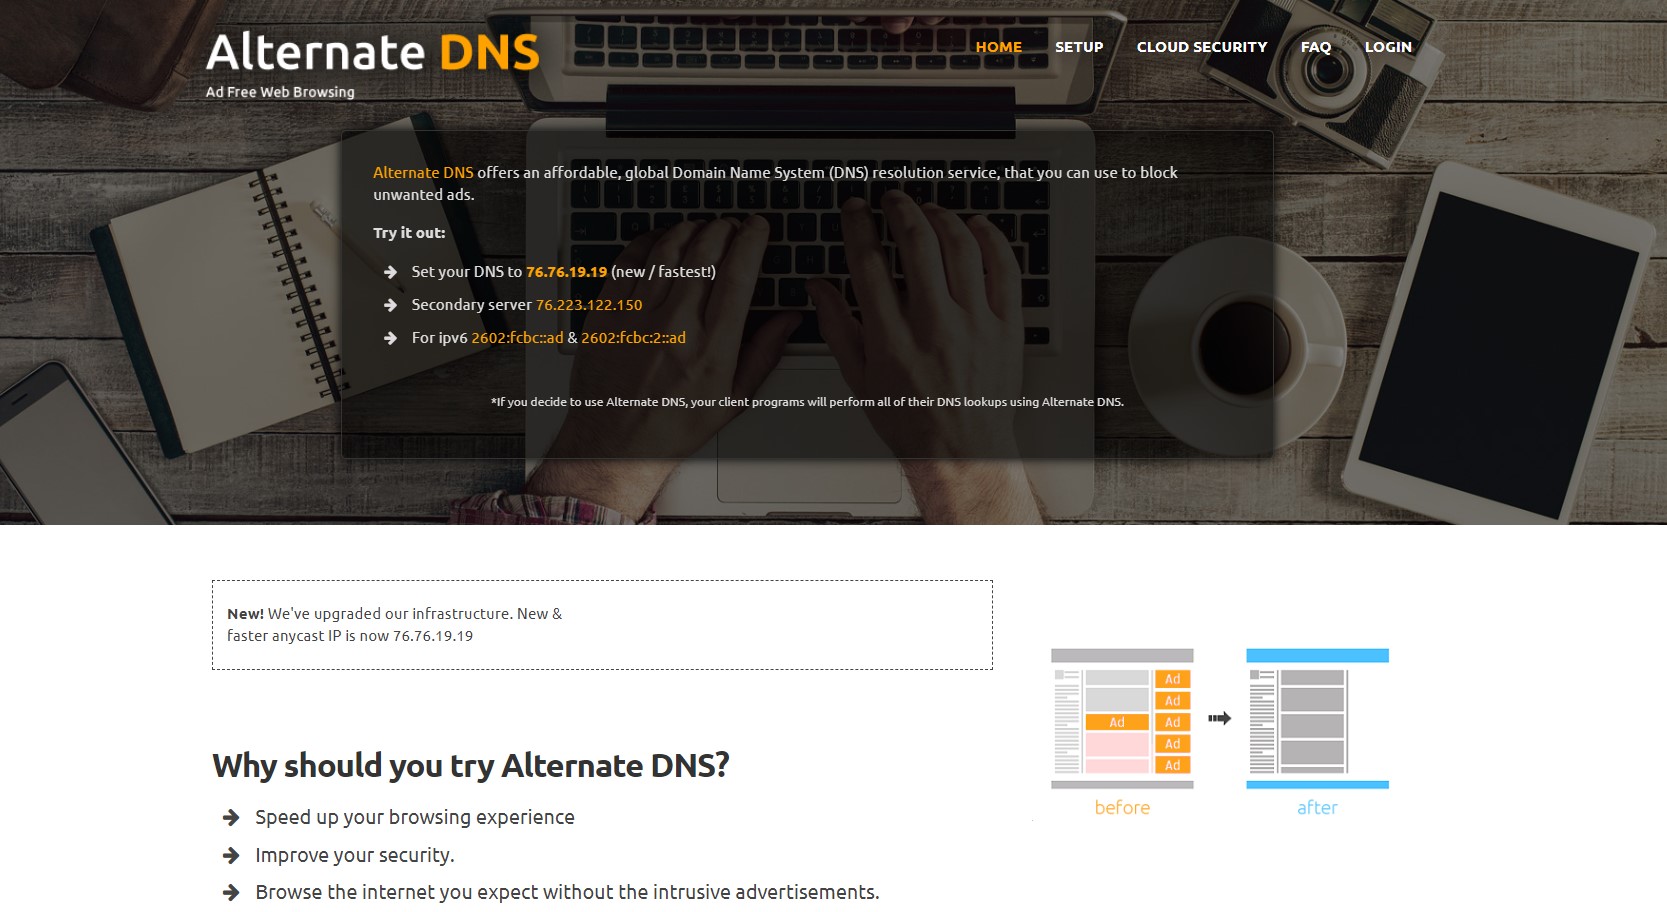 An image featuring Alternate DNS website homepage screenshot